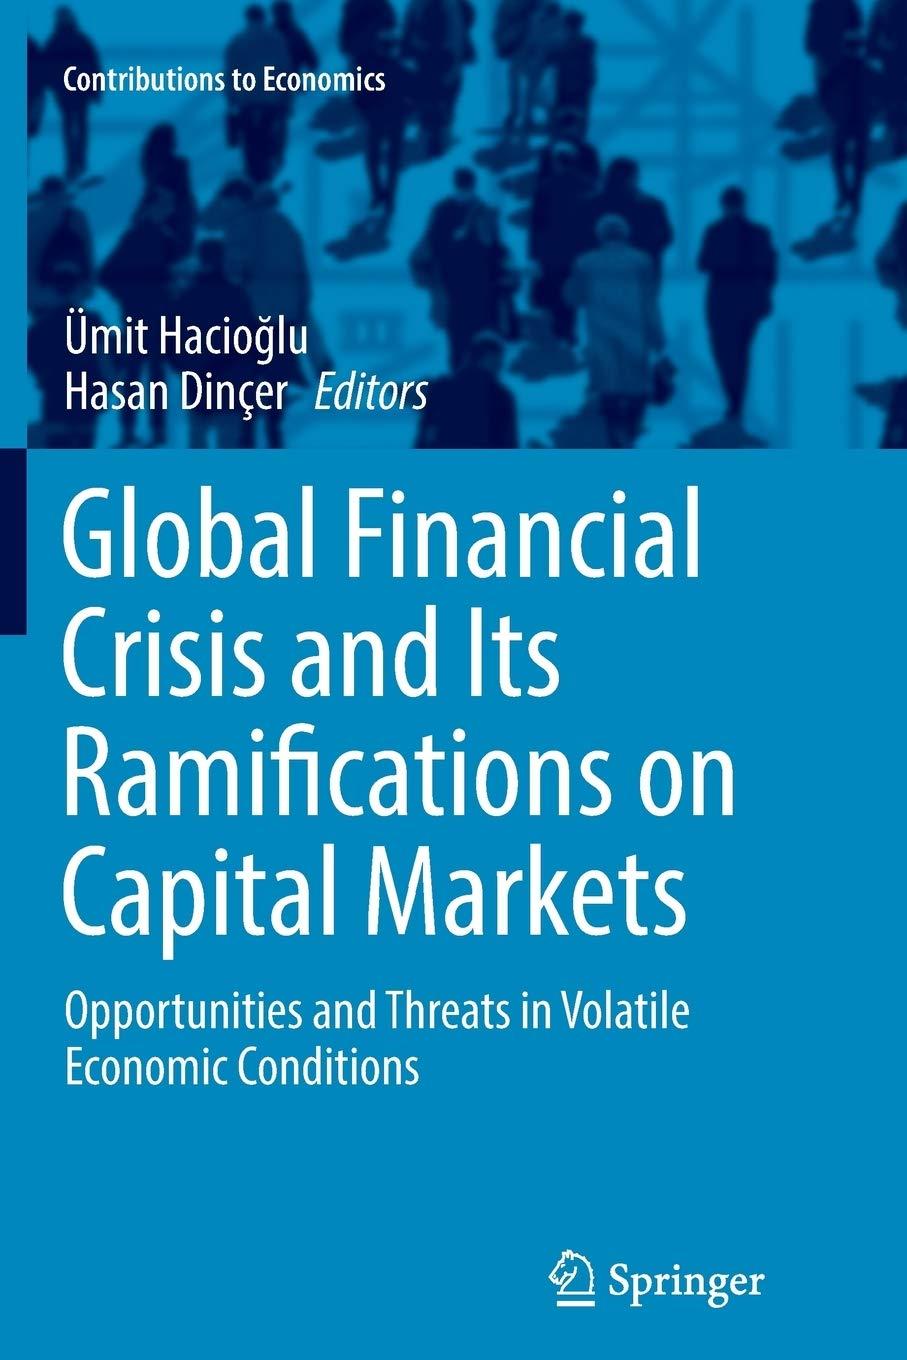 global financial crisis and its ramifications on capital markets 1st edition Ümit hacio?lu, hasan dinçer